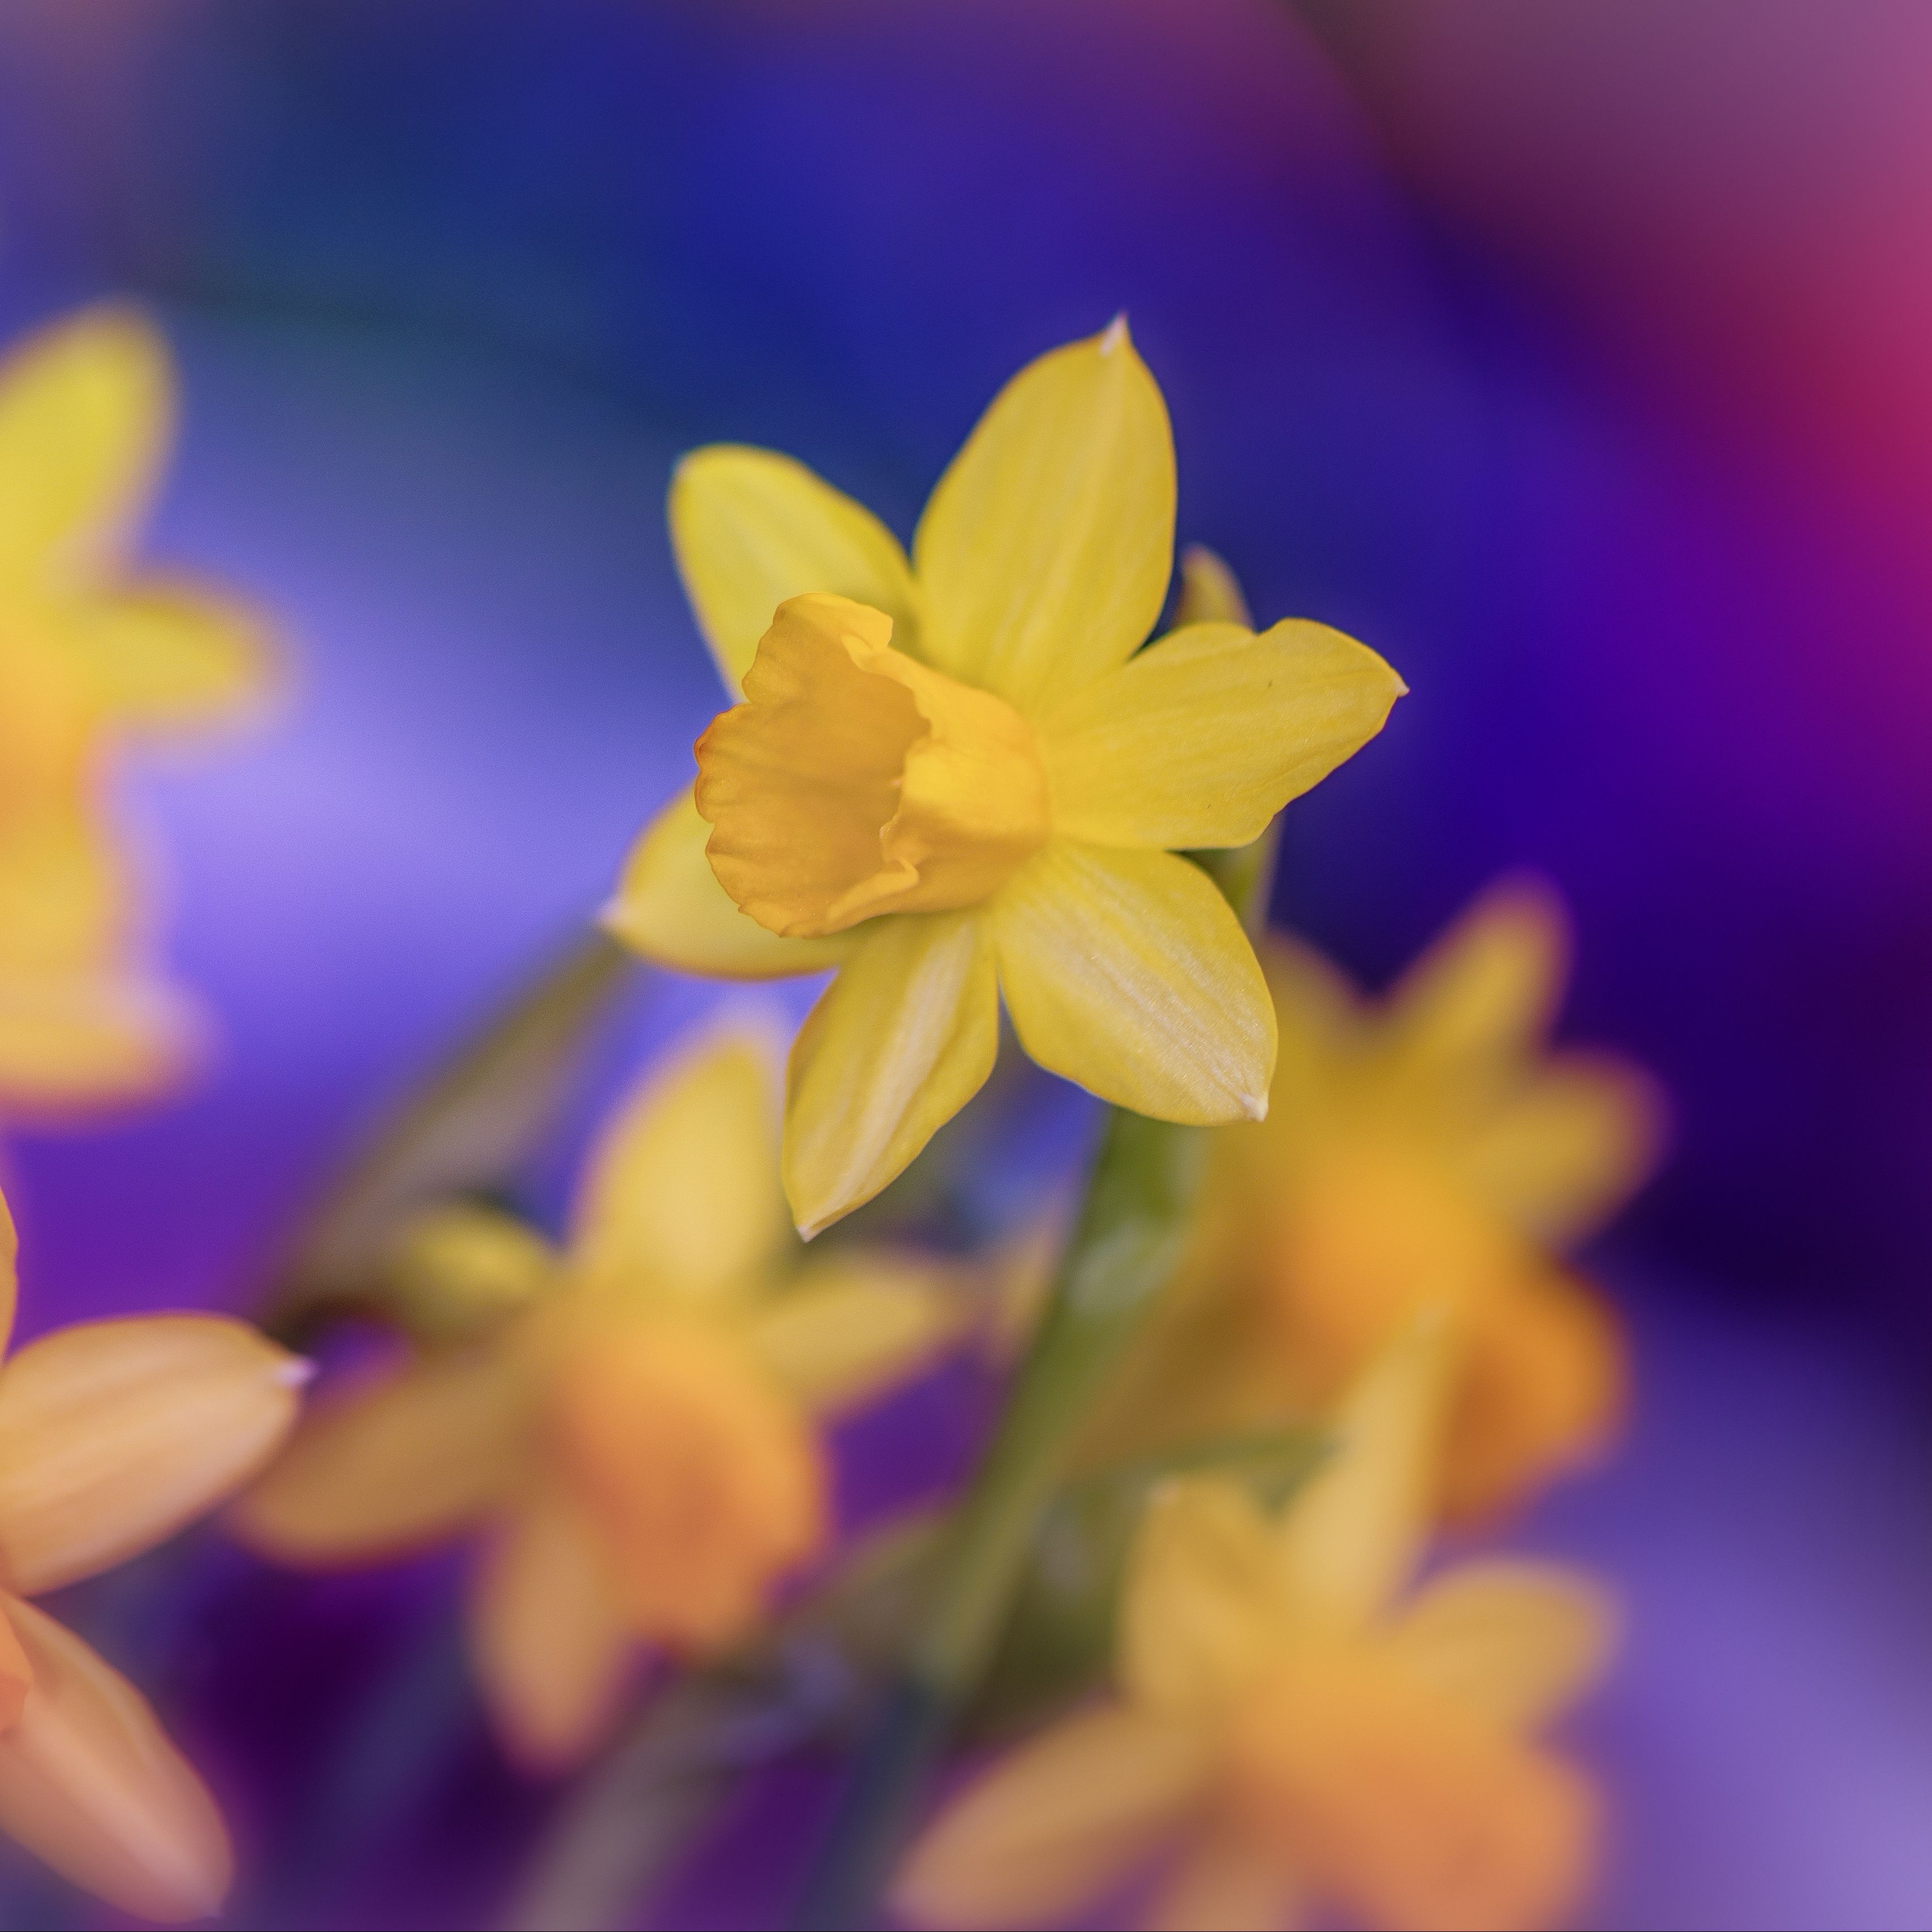 Download wallpaper 3415x3415 daffodils, flowers, yellow, macro